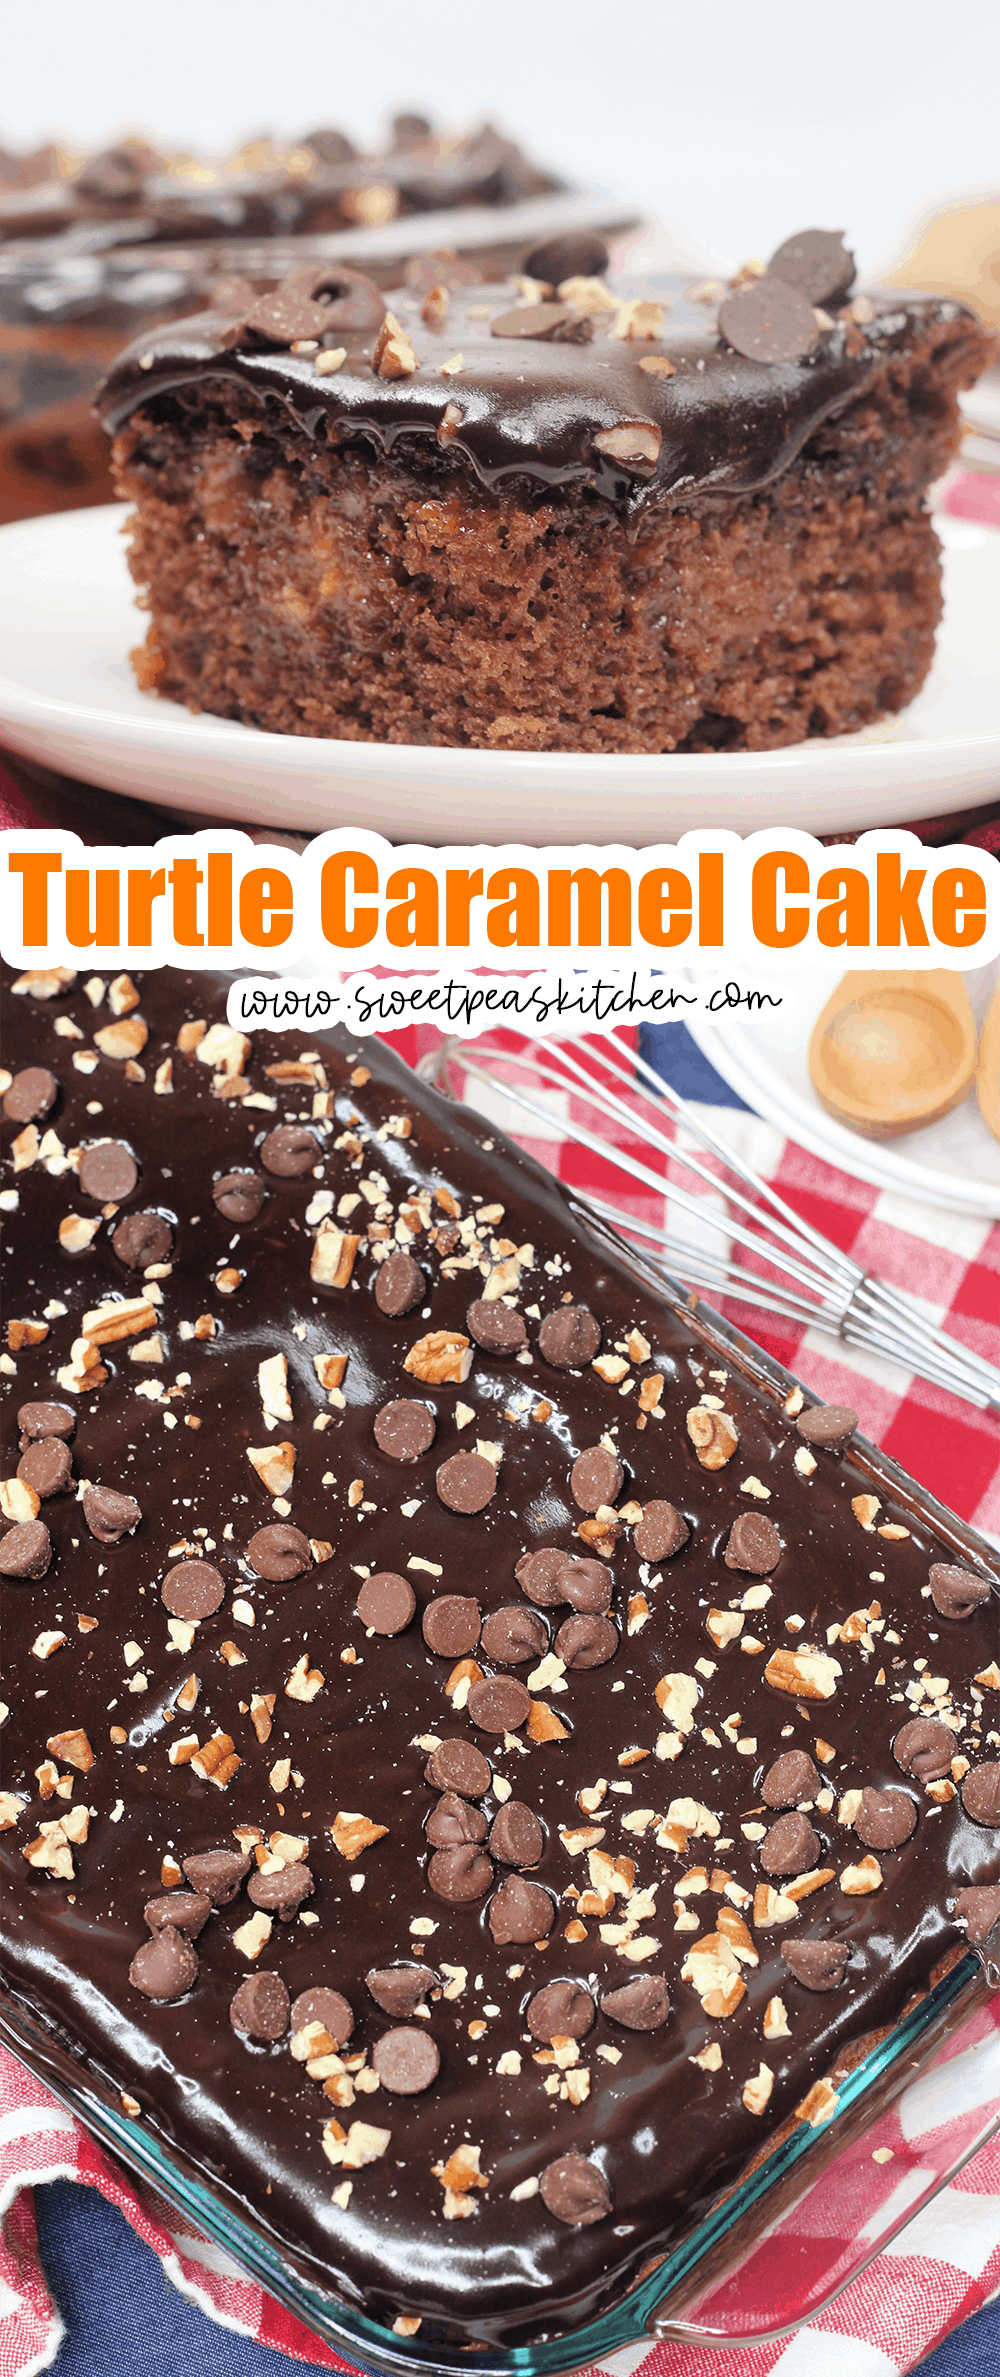 Turtle Caramel Cake on Pinterest